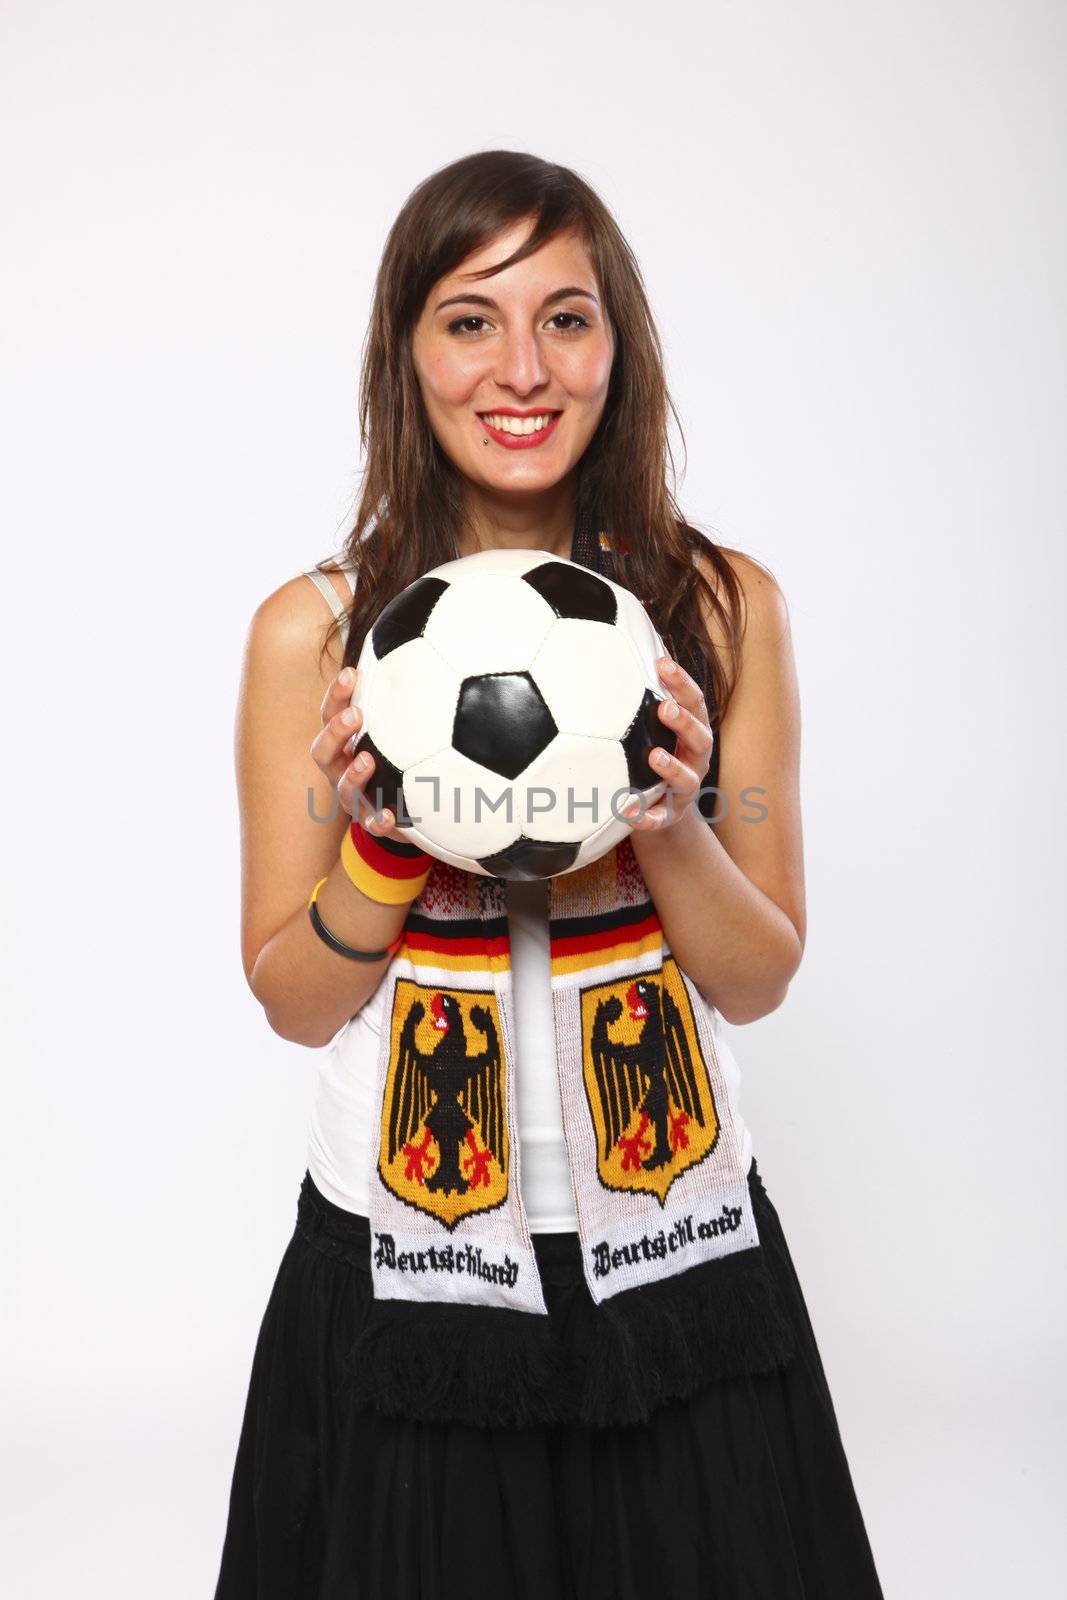 Soccer Fan Girl Holding The Ball by nfx702